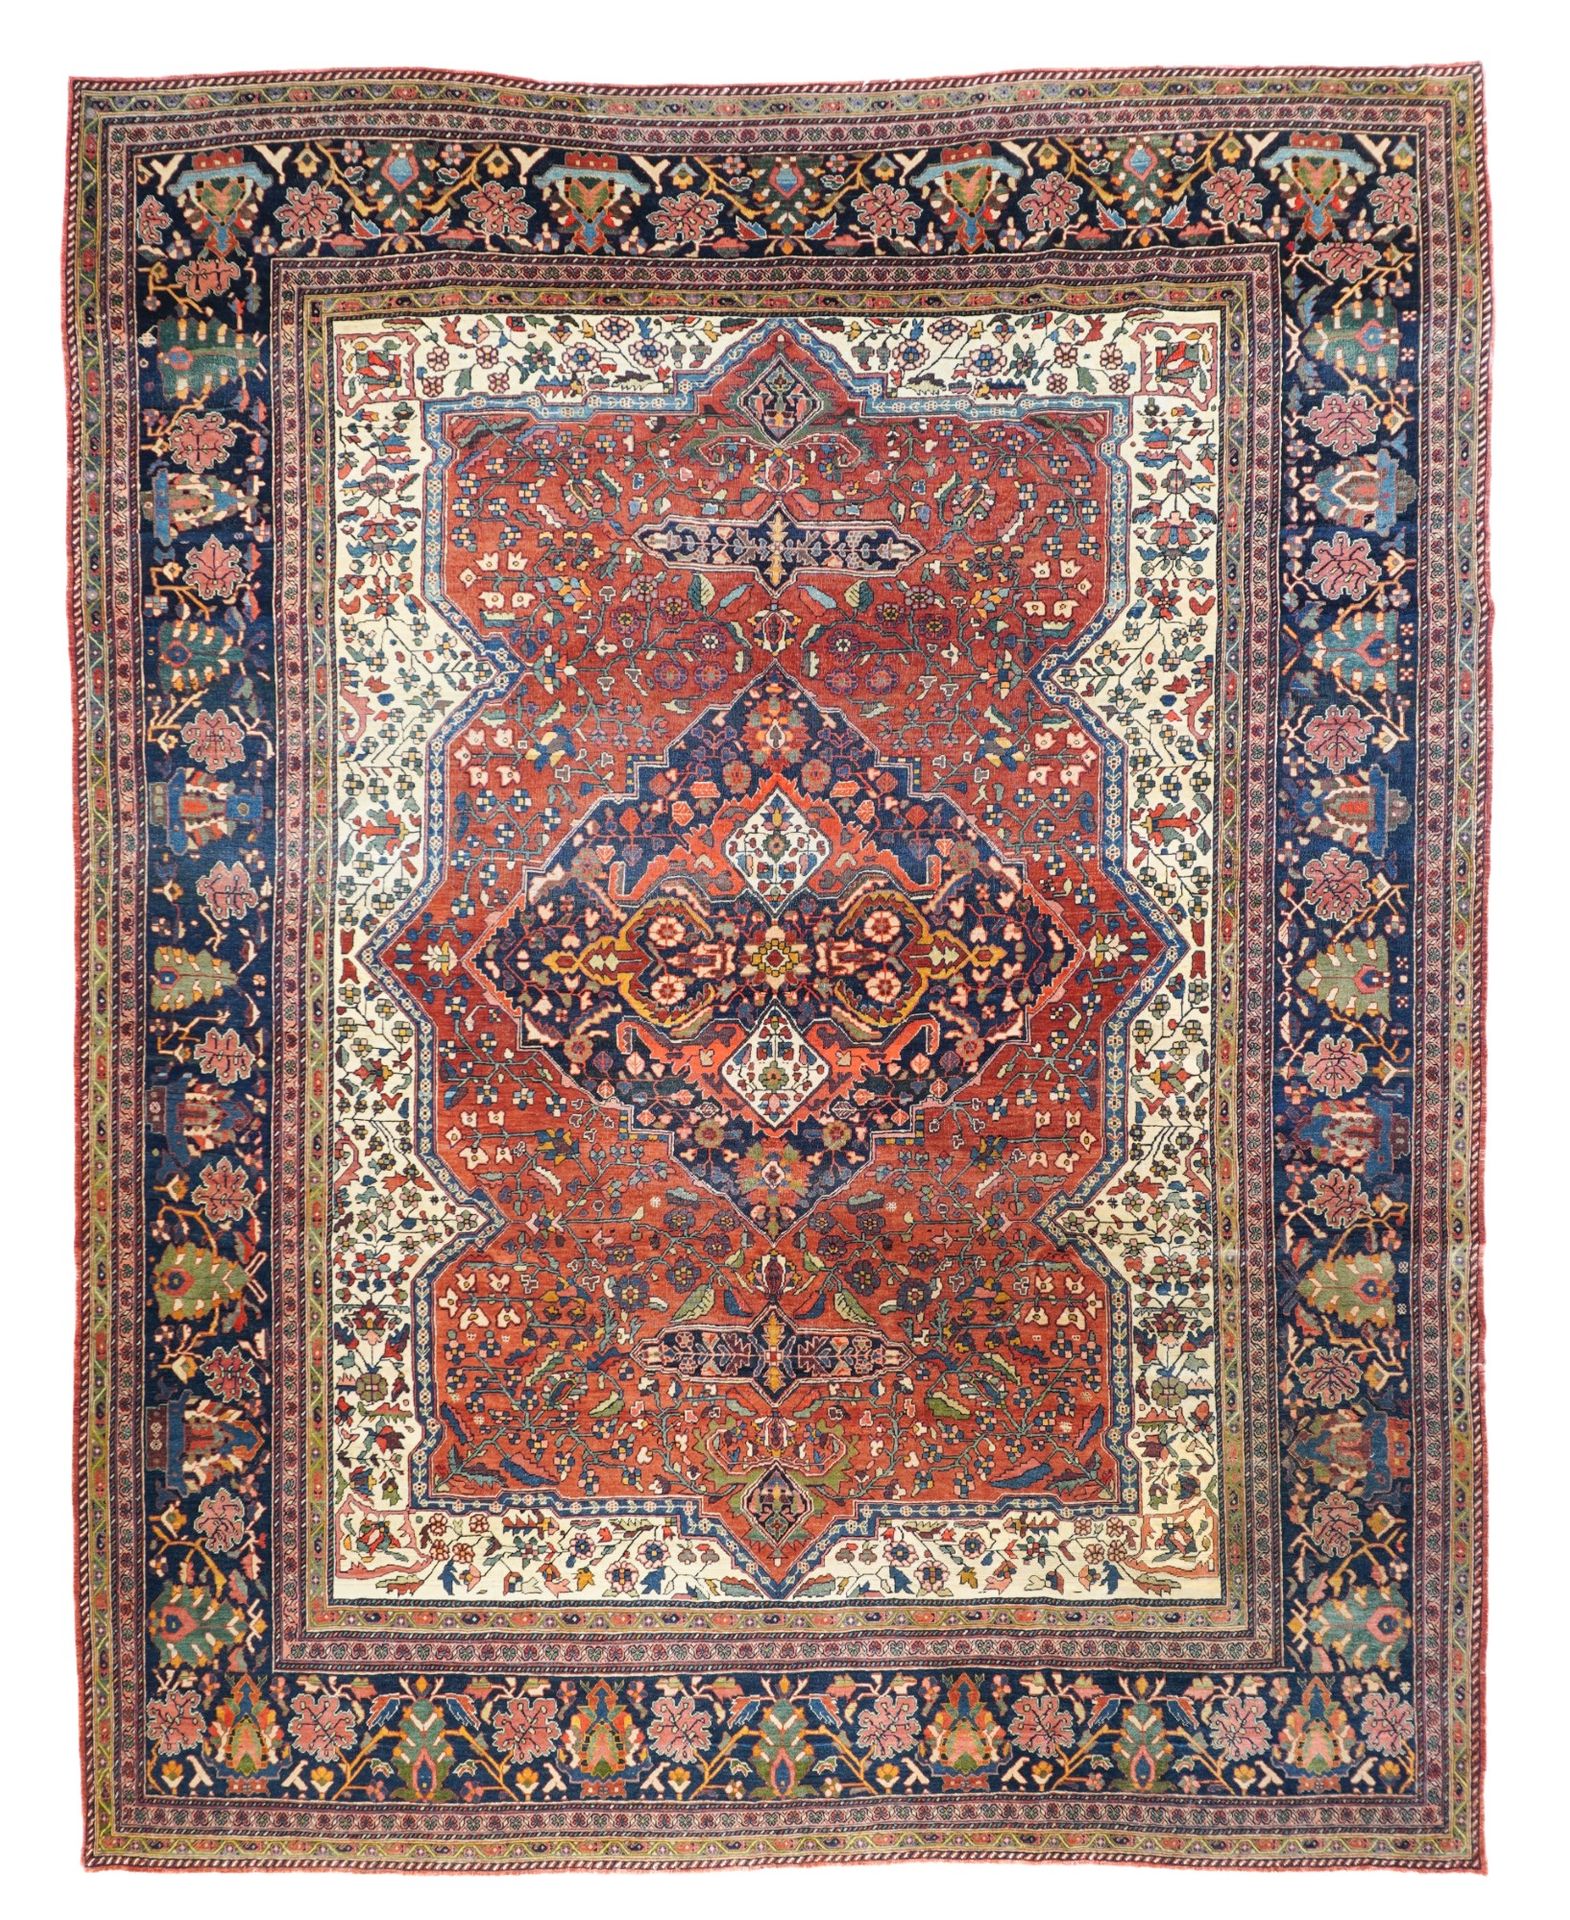 Null Antique Farahan Sarouk Rug, 8'11" x 11'4" ( 2.72 x 3.45 M )